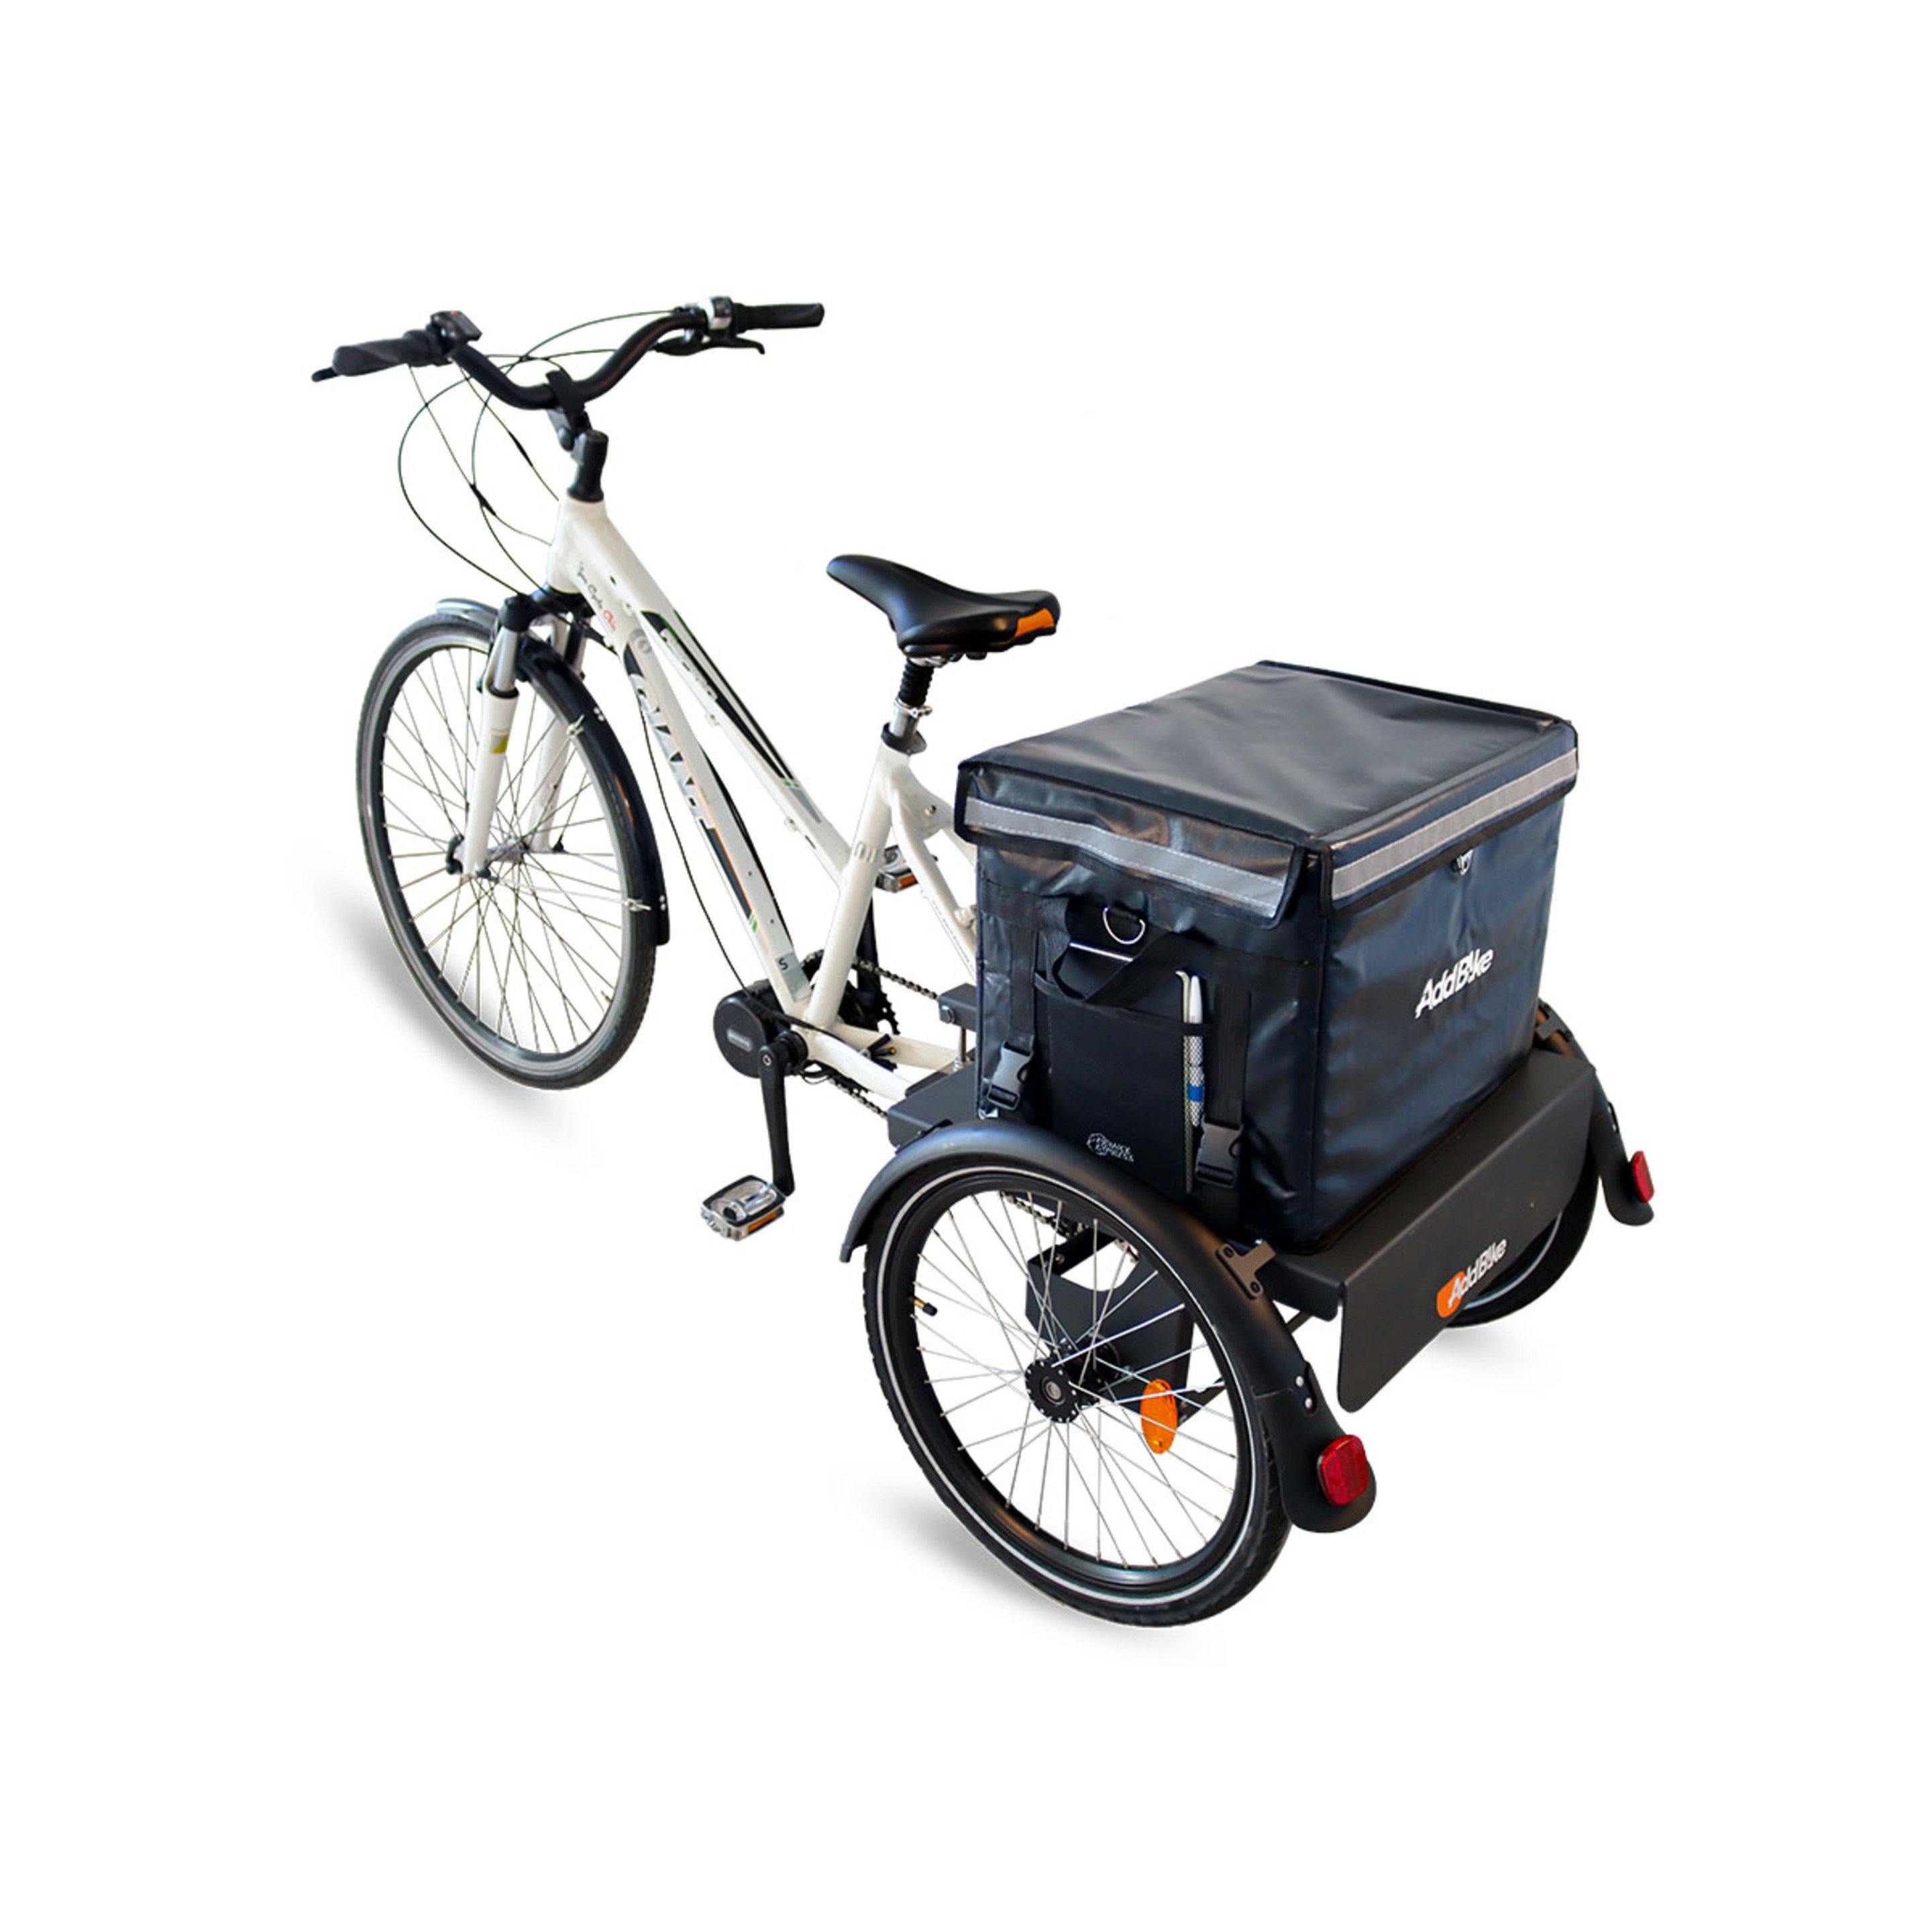 Kit Trasero: Transporte De Carga  Addbike B-back Box - Gris - Kit Trasero: Transporte De Carga  MKP